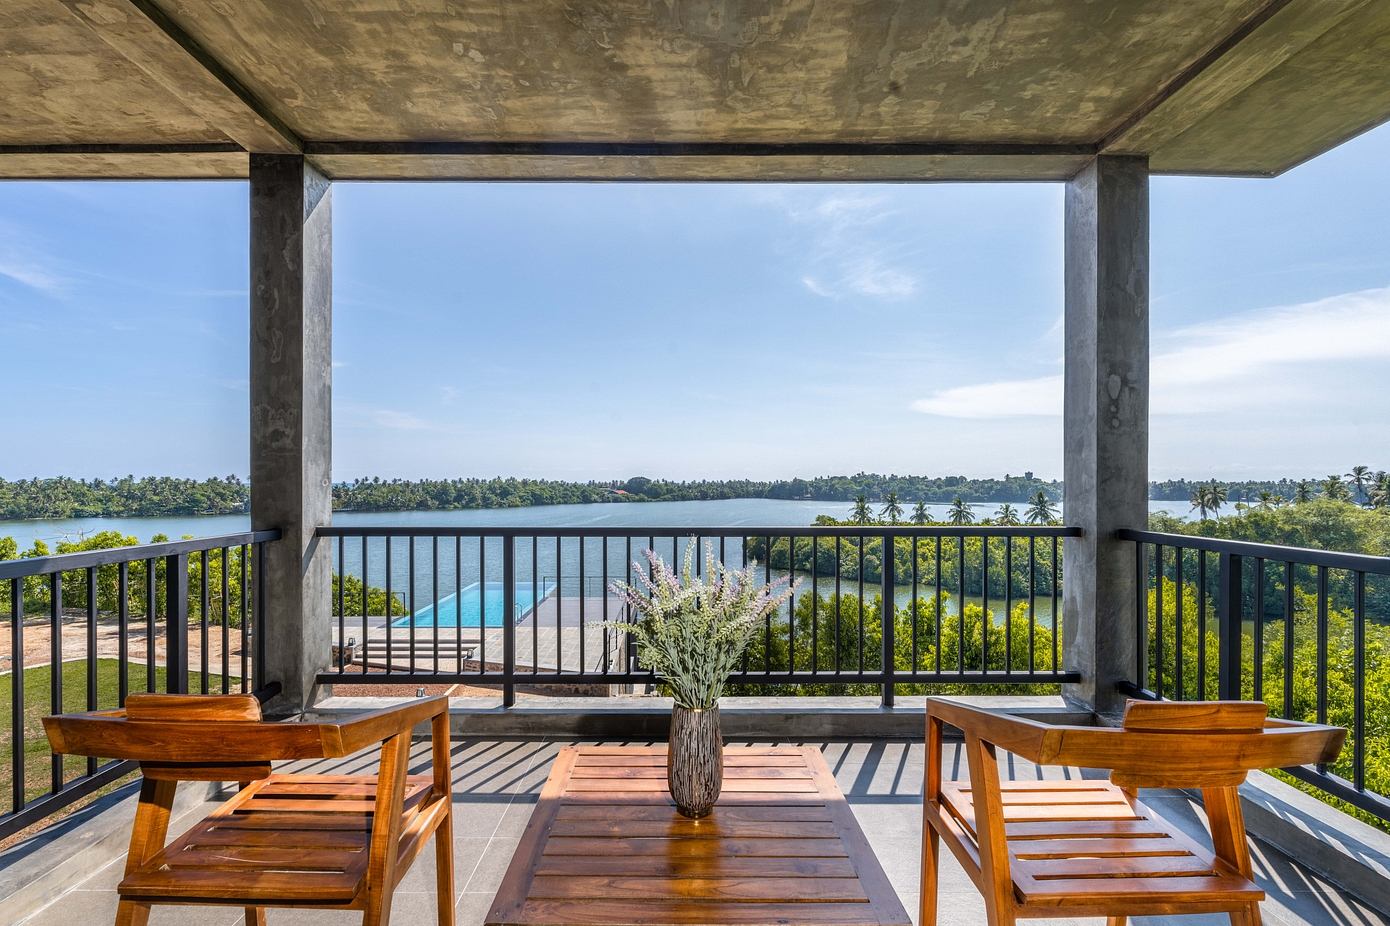 CInnamon Villa: Discover Tropical Modern Luxury in Sri Lanka